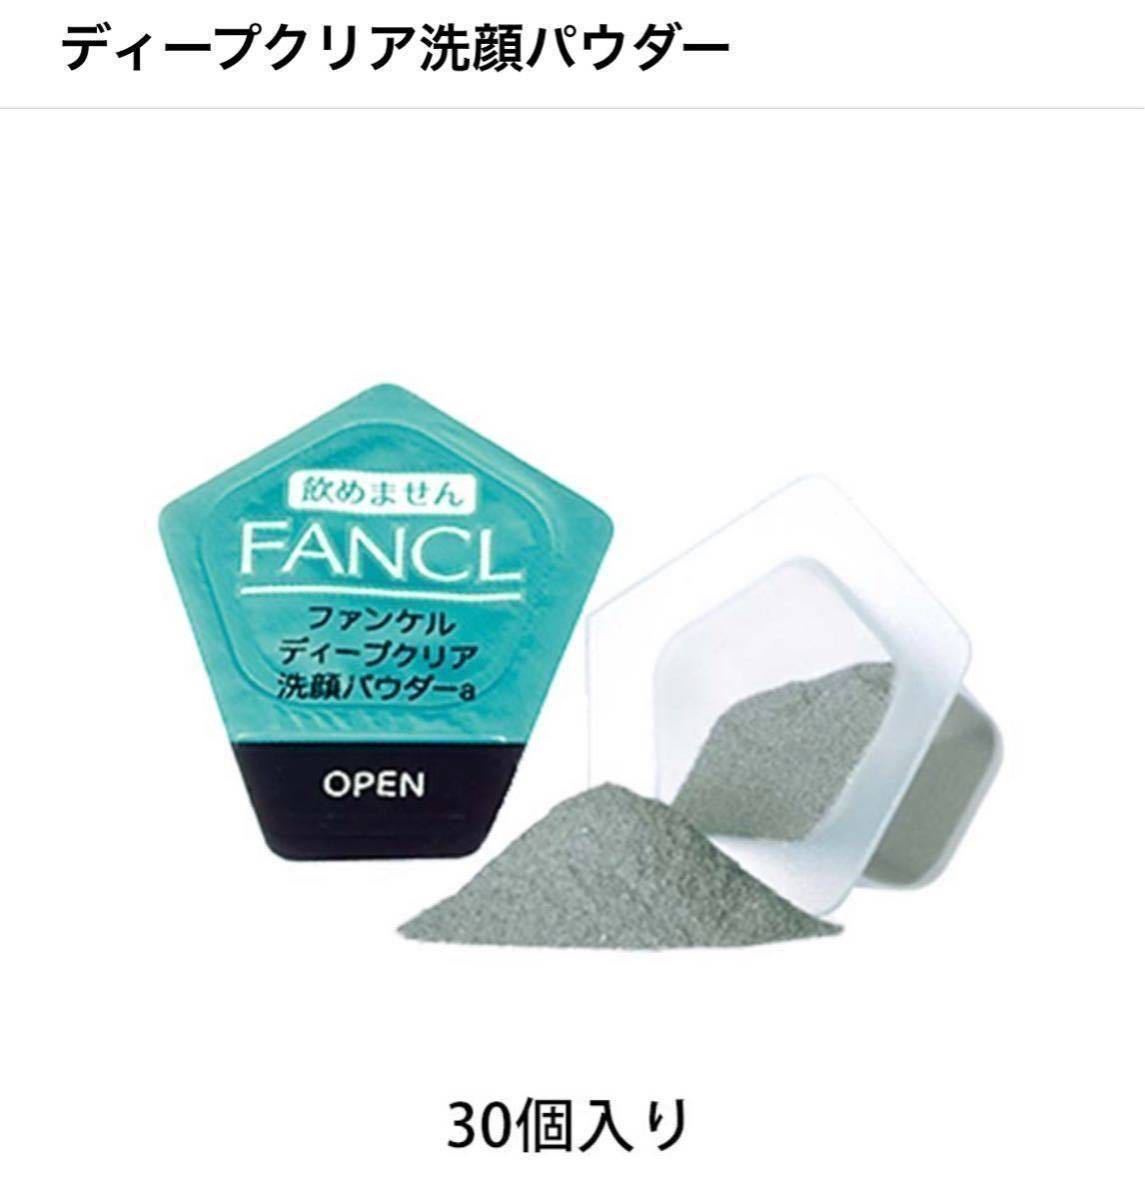 FANCL Fancl deep clear face-washing powder 30 piece insertion enzyme face-washing powder free shipping 